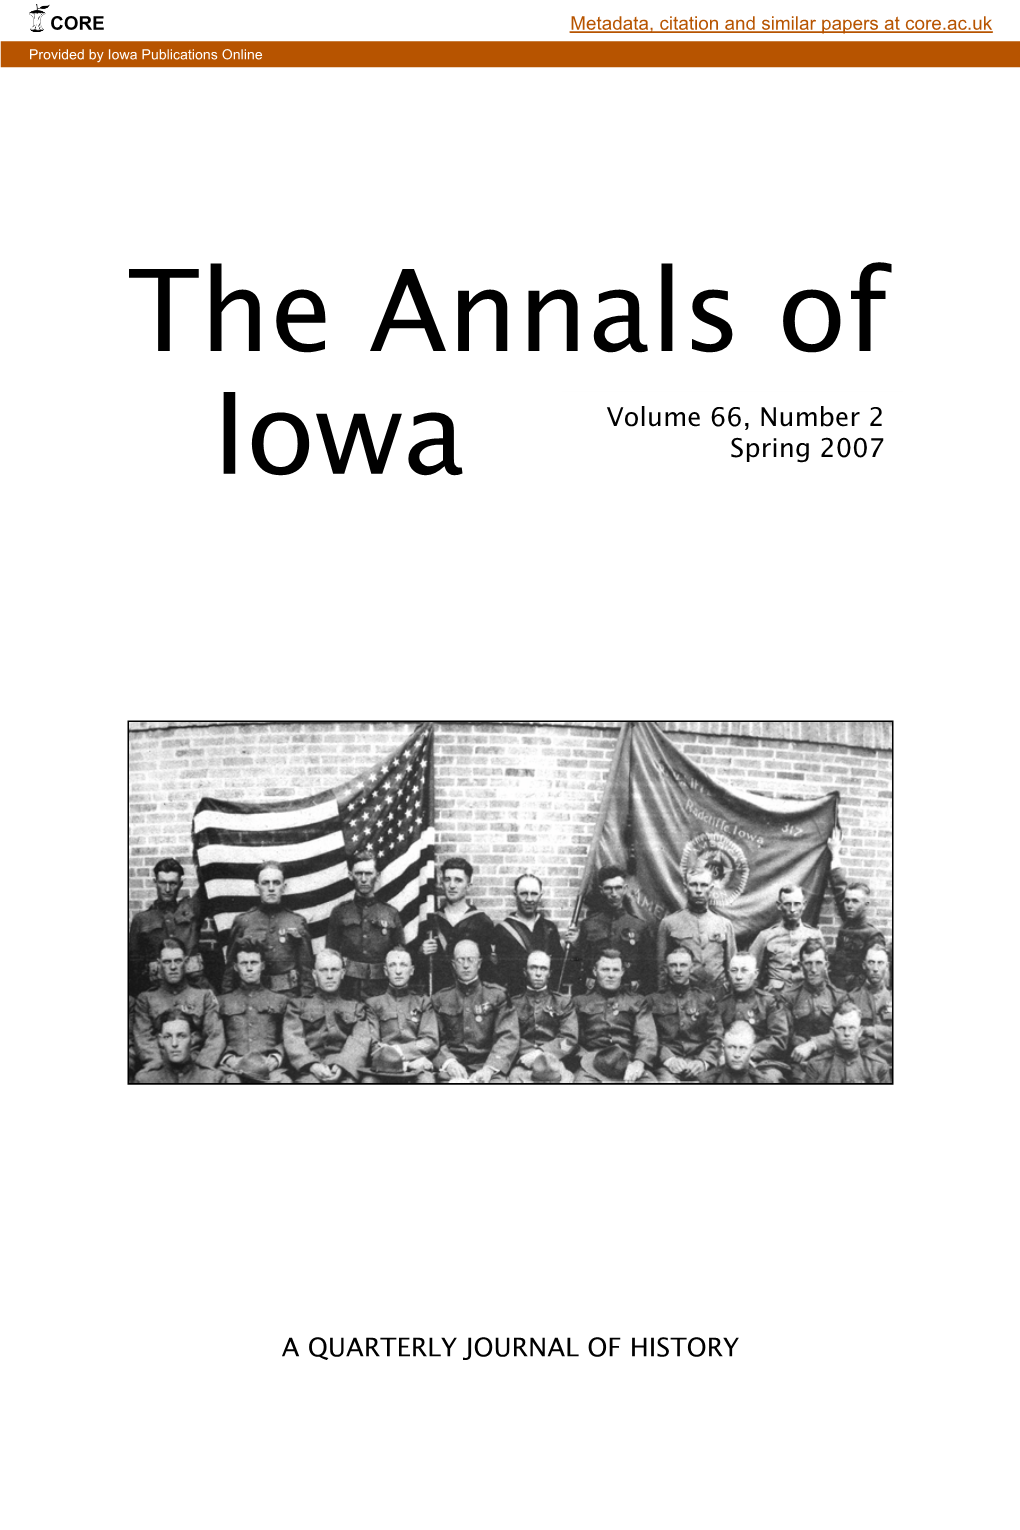 THE ANNALS of IOWA 66 (Spring 2007)